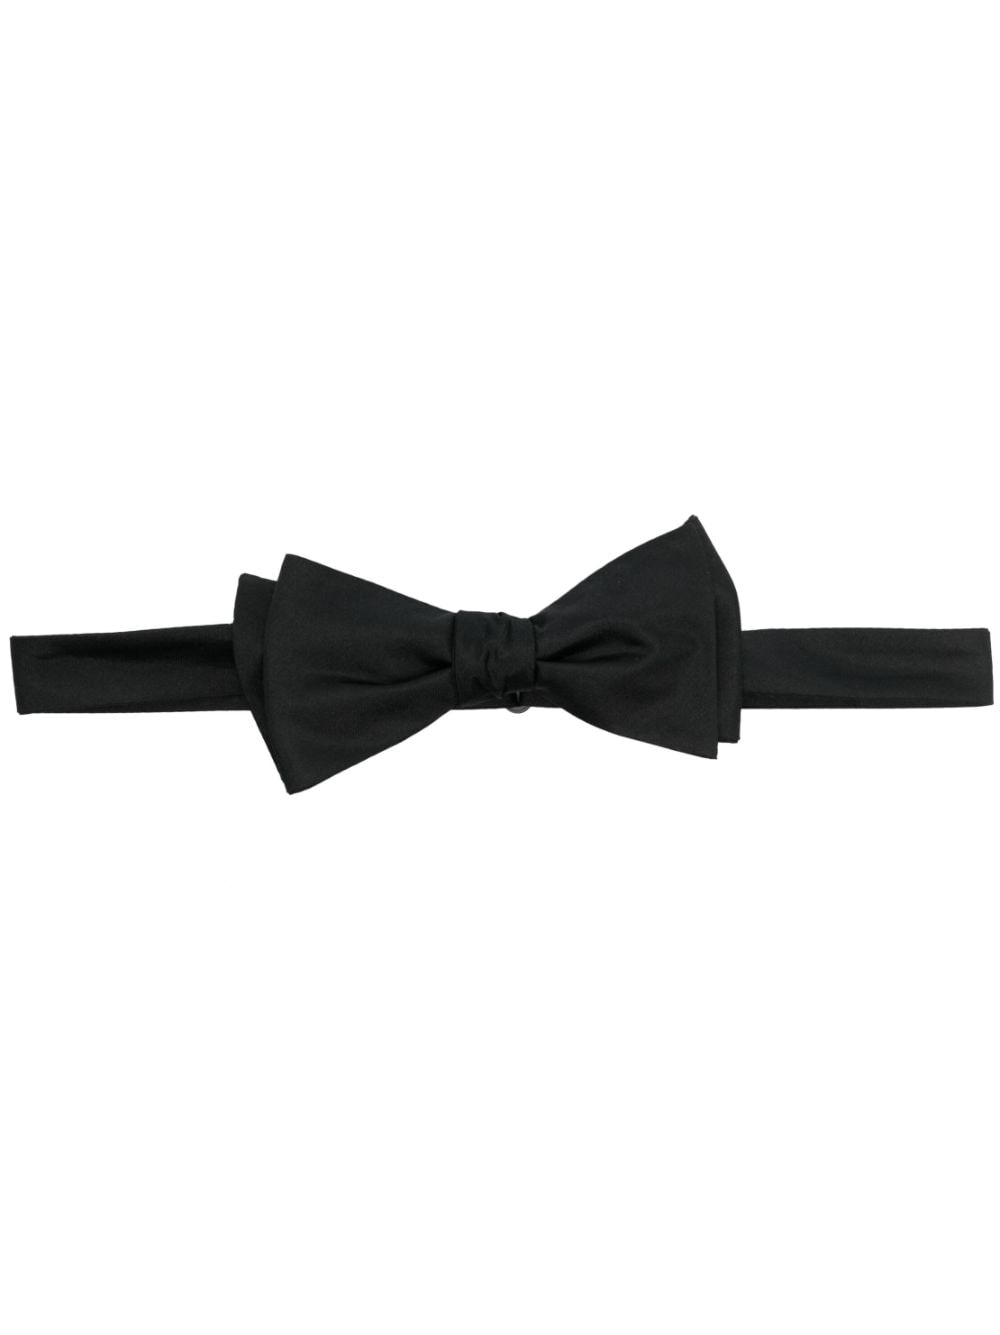 FURSAC adjustable silk bow tie - Black von FURSAC